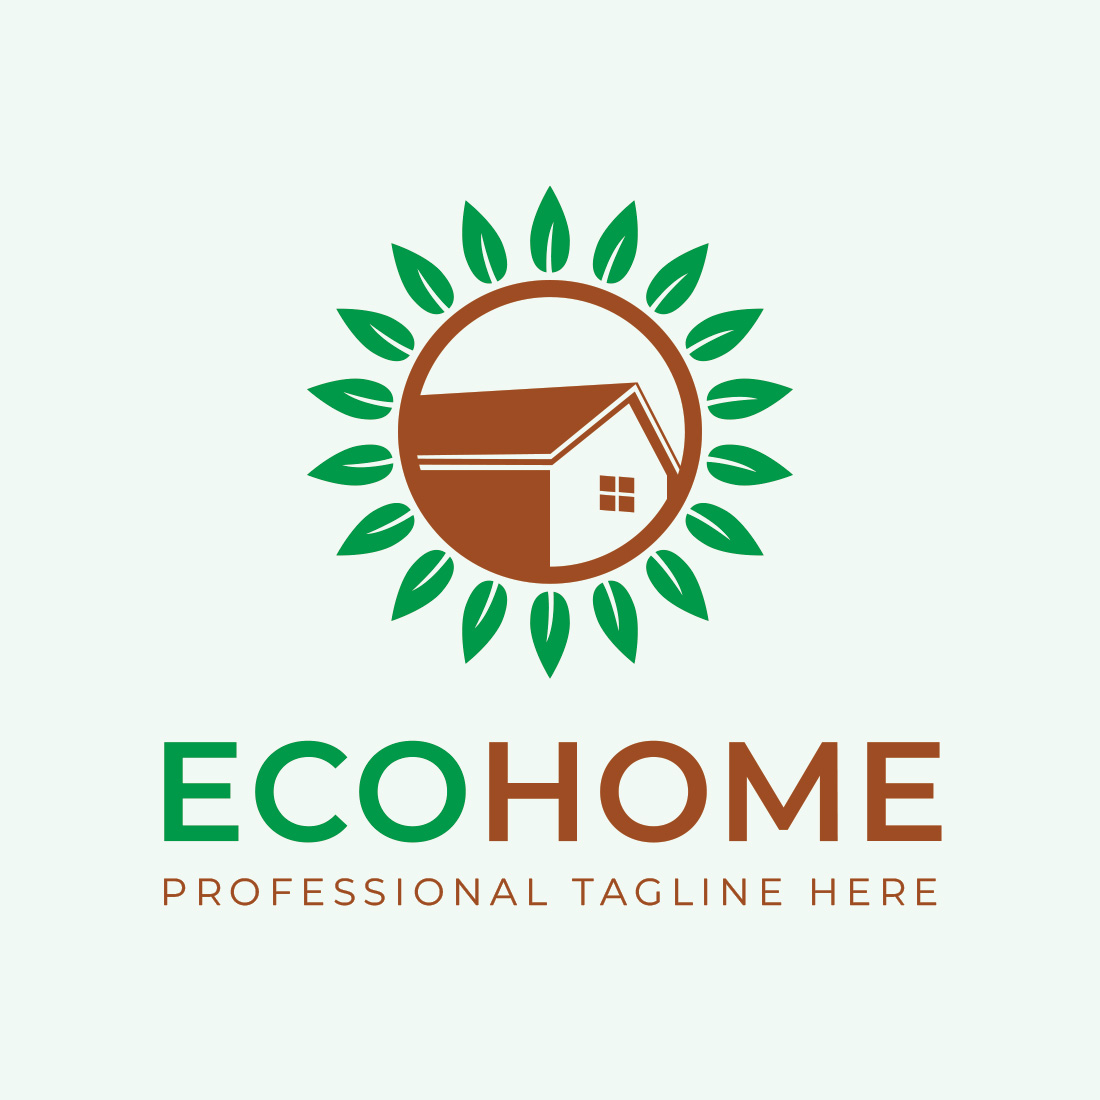 Eco Home Logo Template cover image.